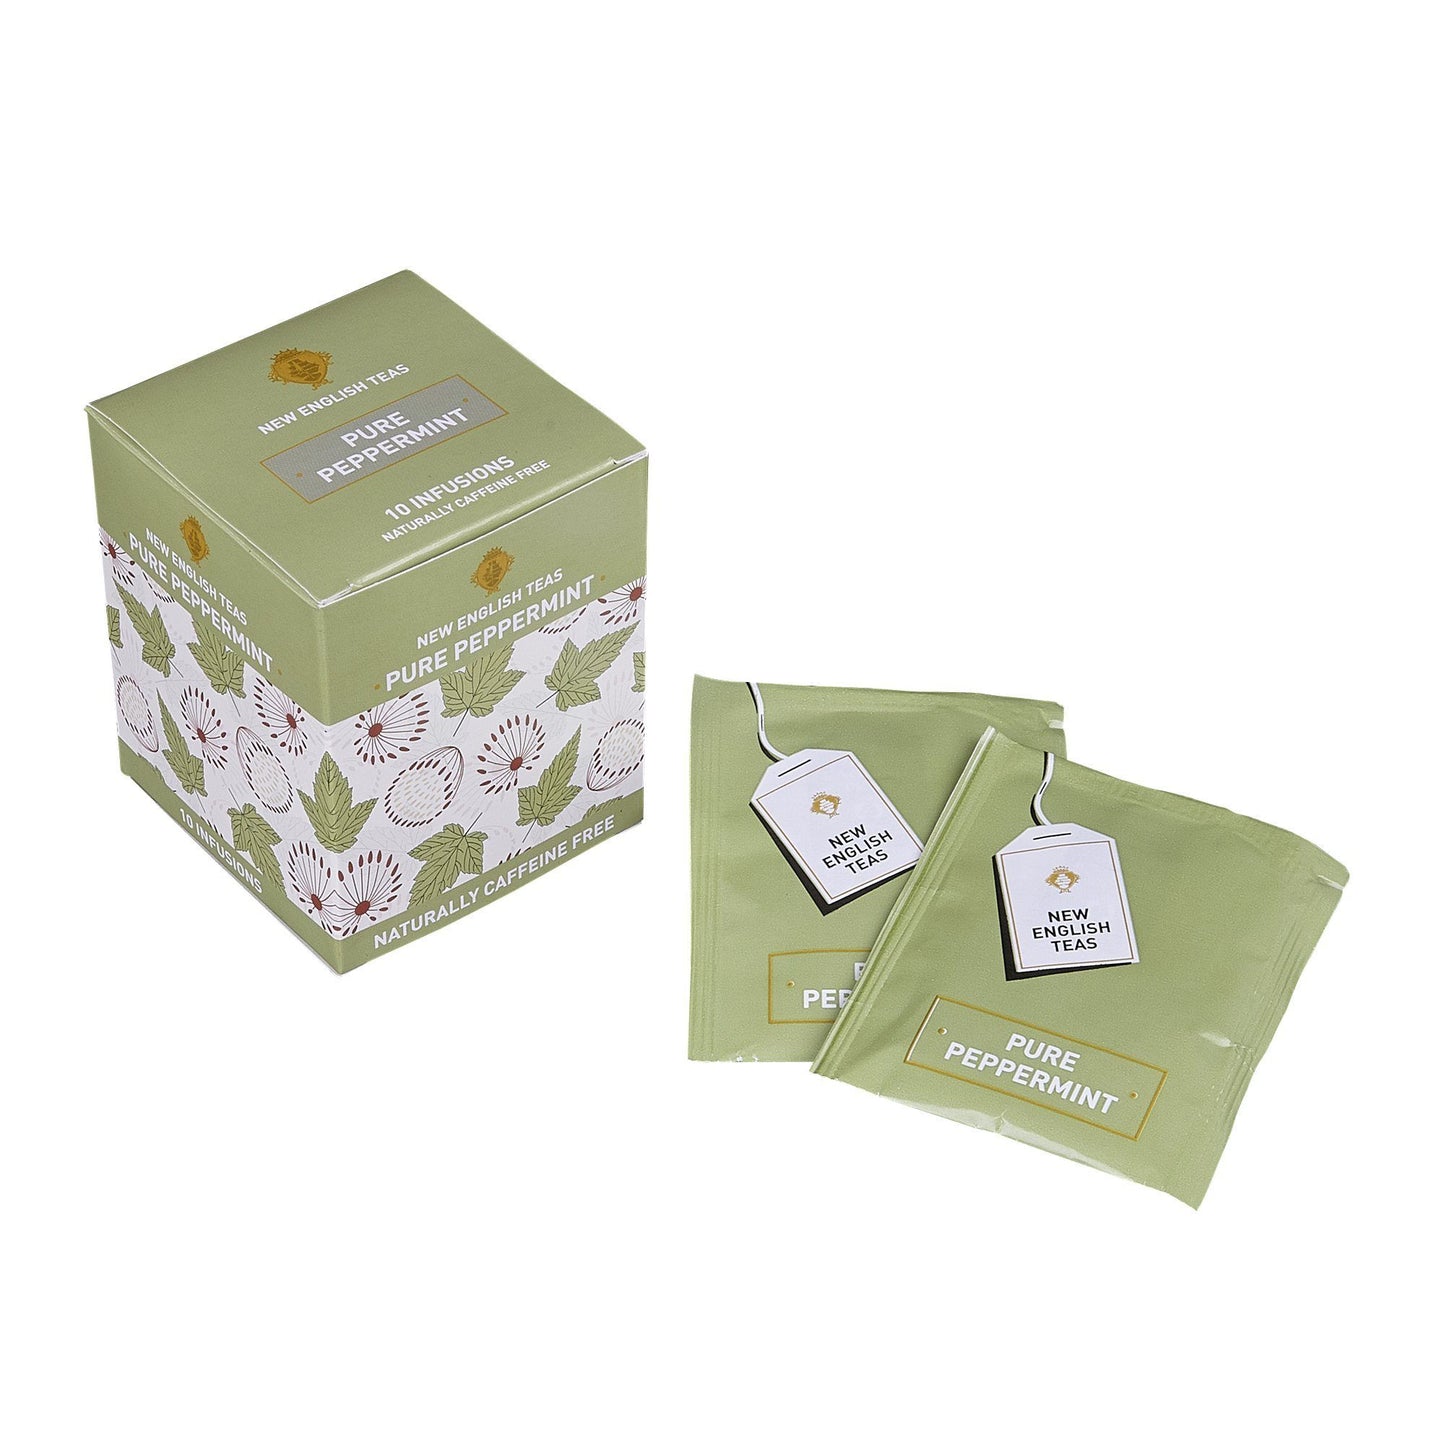 Pure Peppermint Tea 10 Individually Wrapped Teabags Herbal Tea New English Teas 